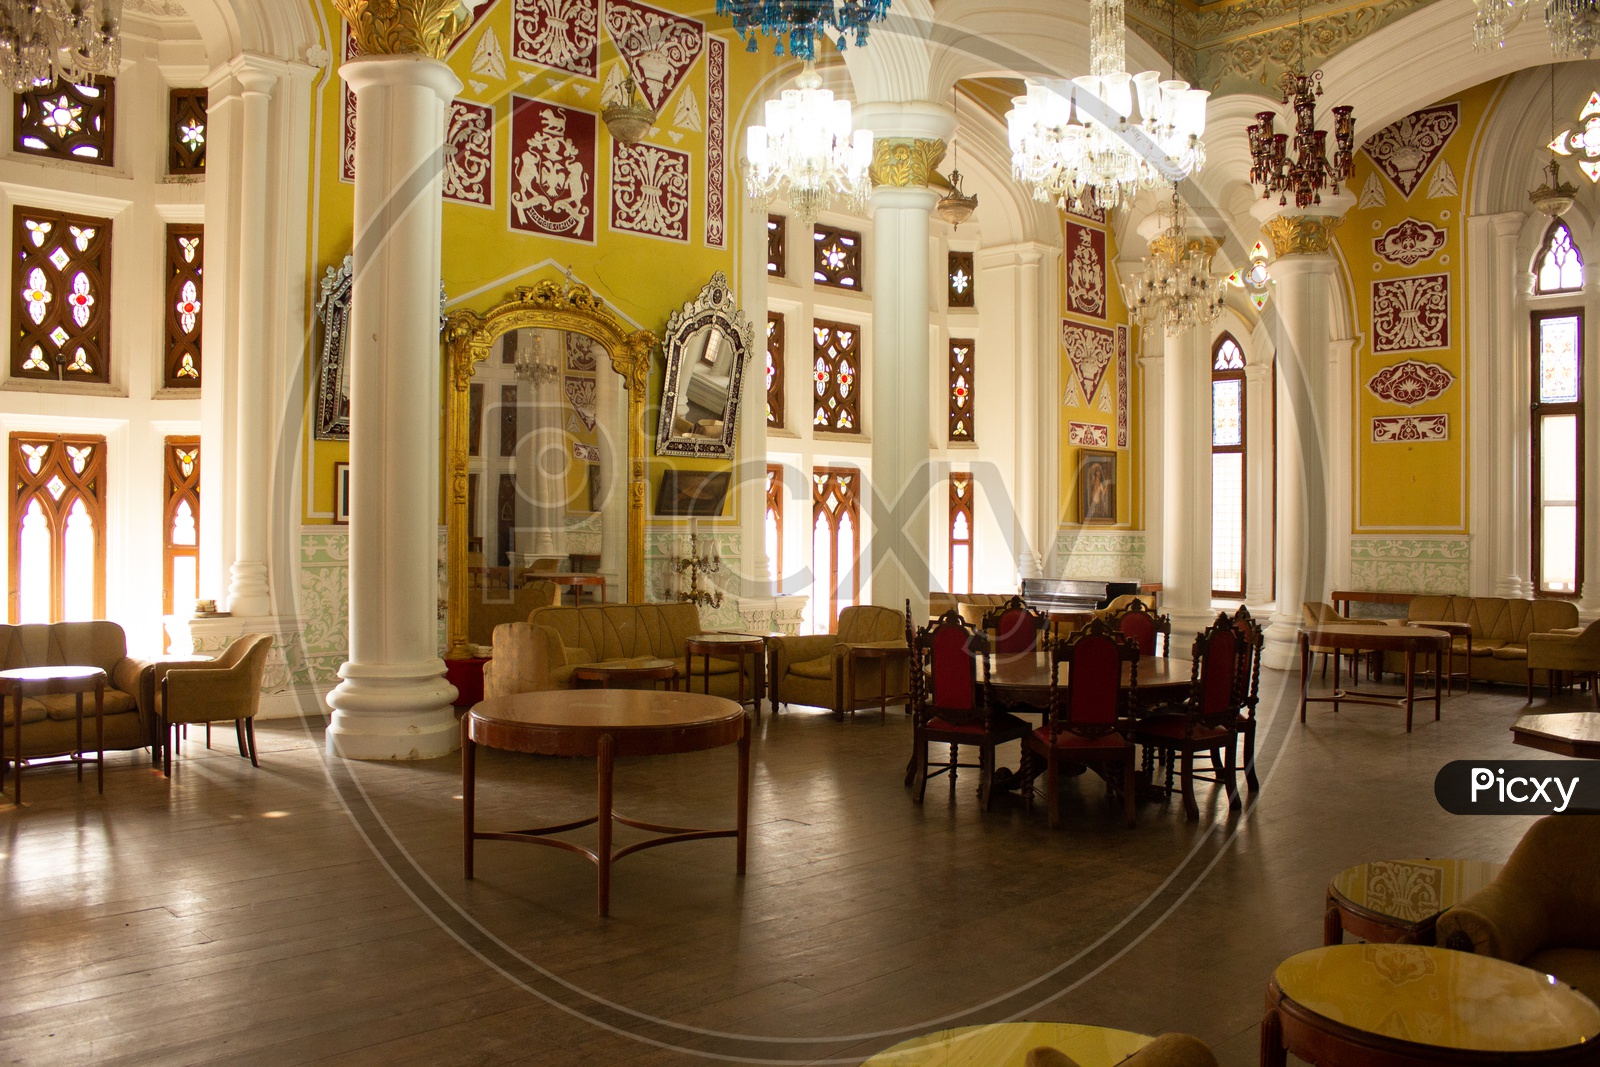 Interiors of Jayamahal Palace - Hall